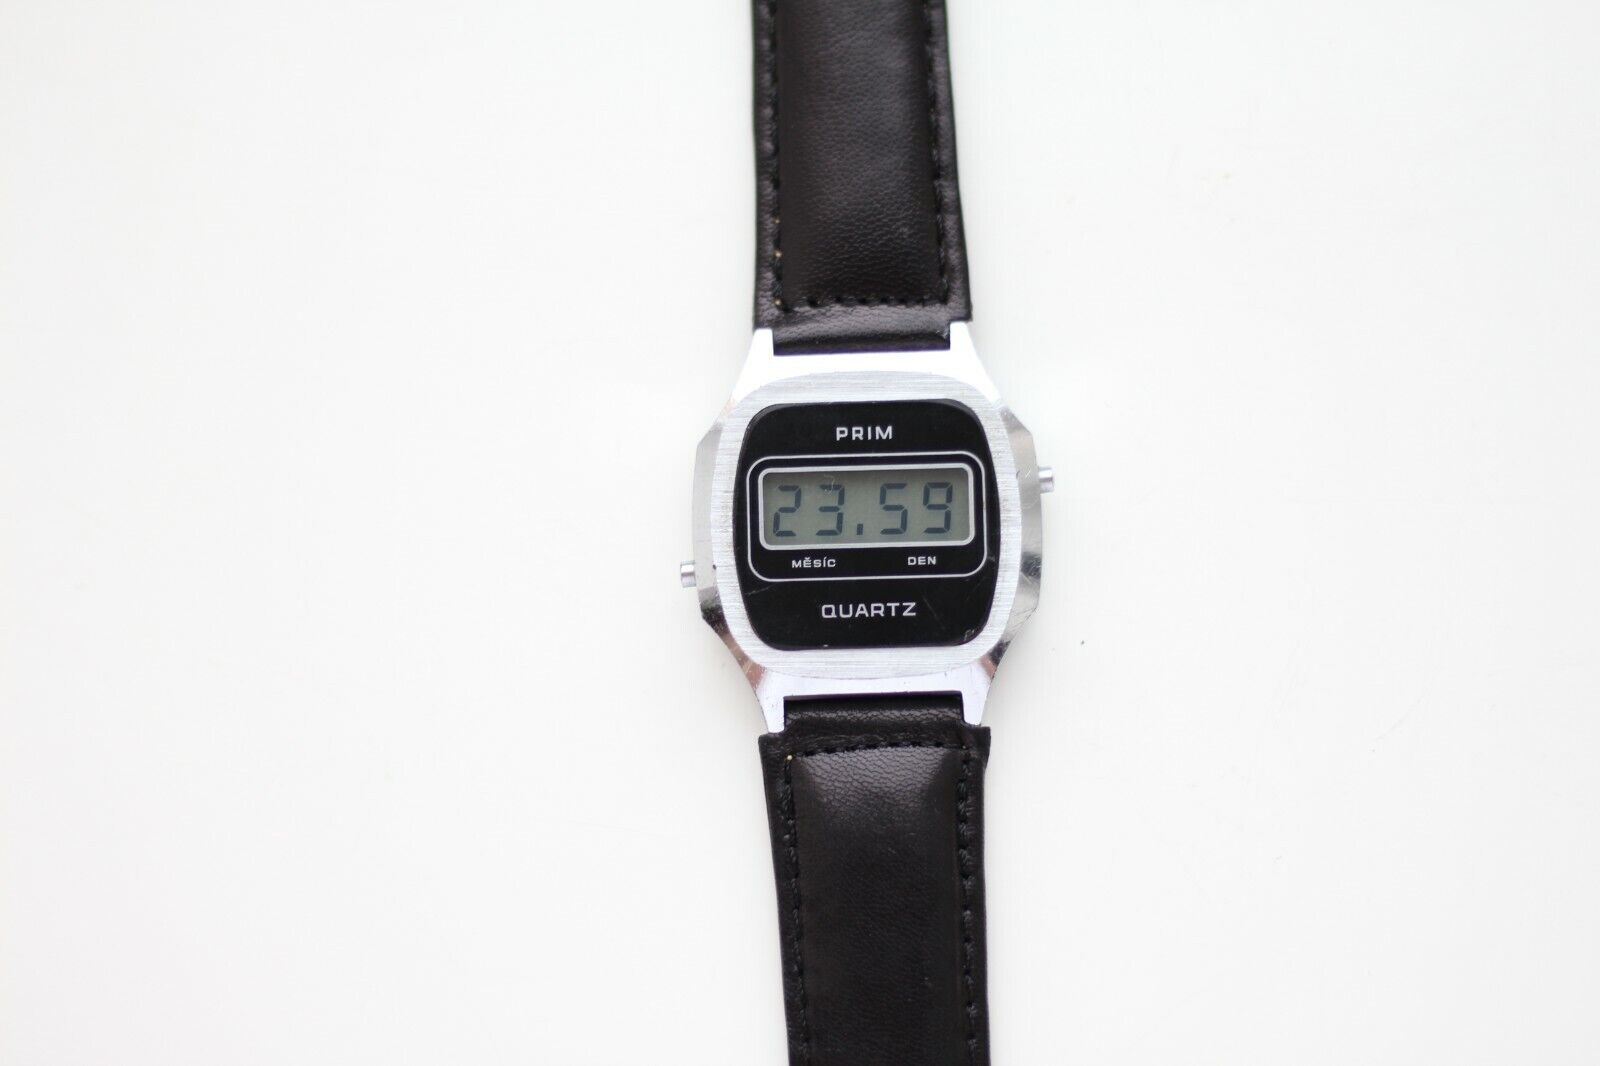 RARE watch PRIM Quartz / Digital Watch Electronica Czechoslovakia / ORIGINAL